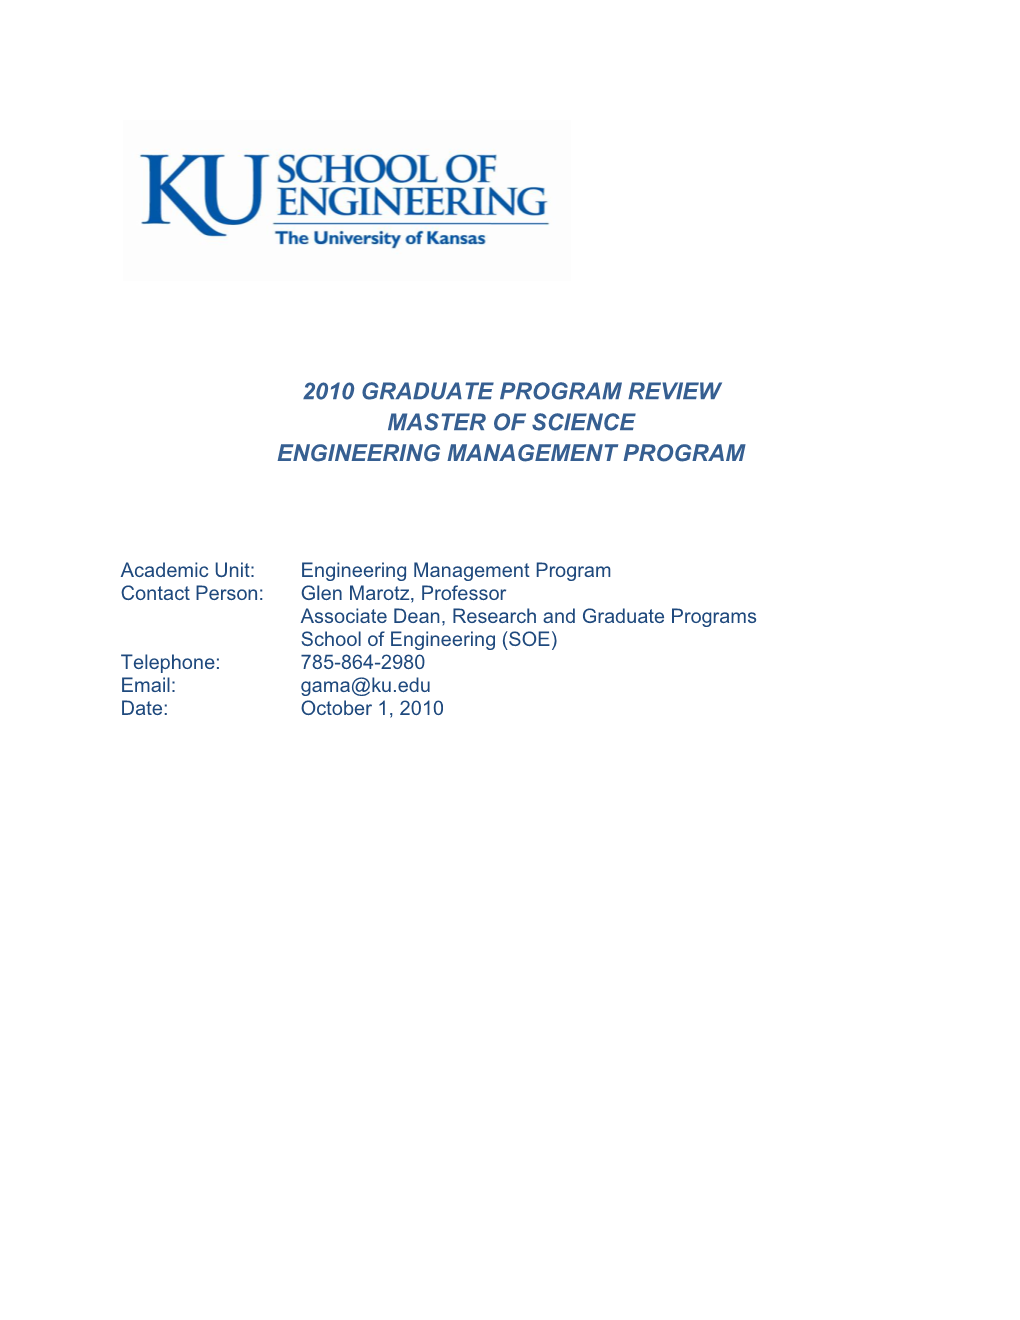 2010 Graduate Program Review Master of Science Engineering Management Program